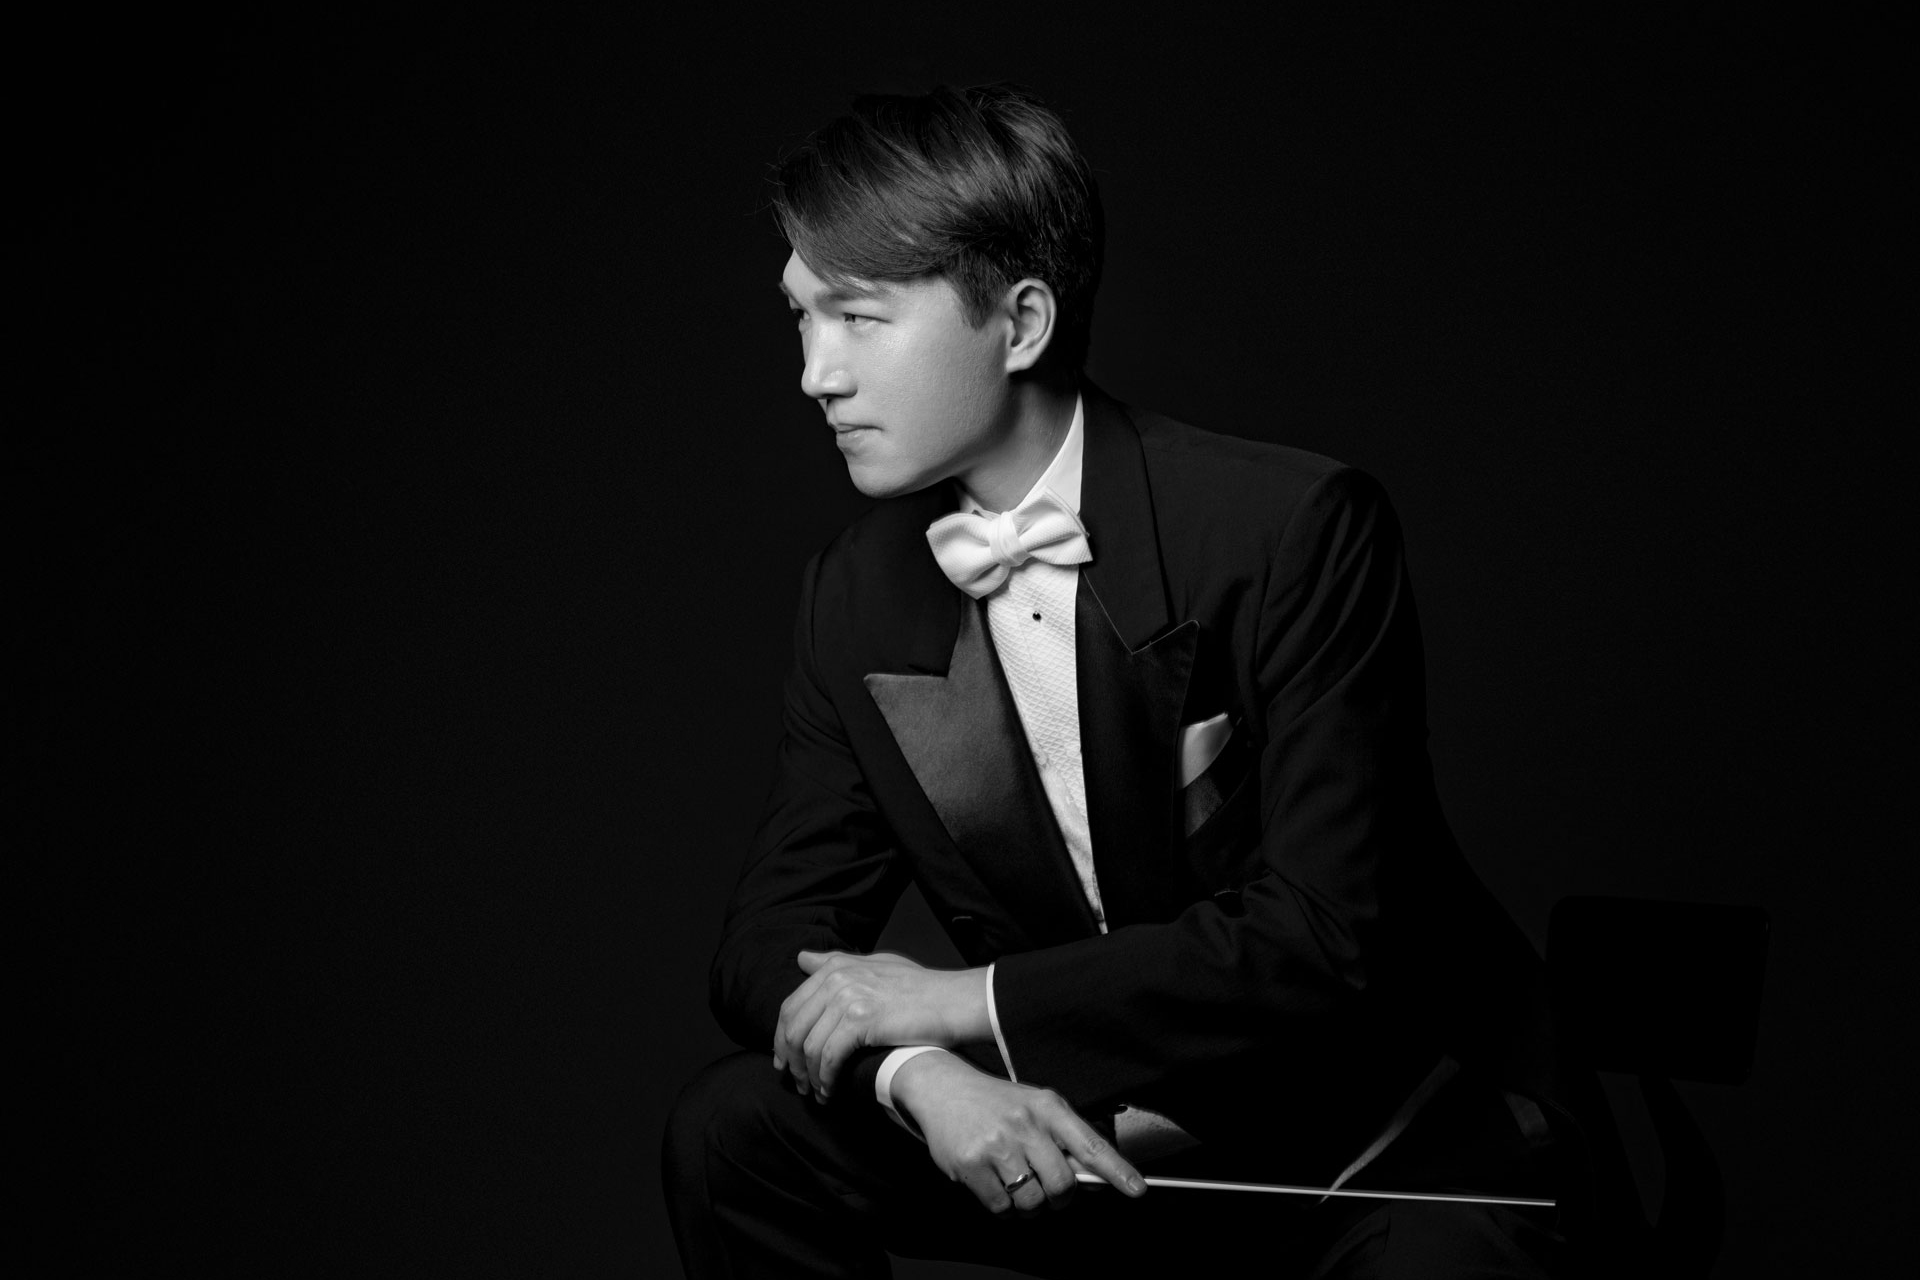 Lio Kuokman, conductor, リオ・クオクマン, 指揮, conducteur